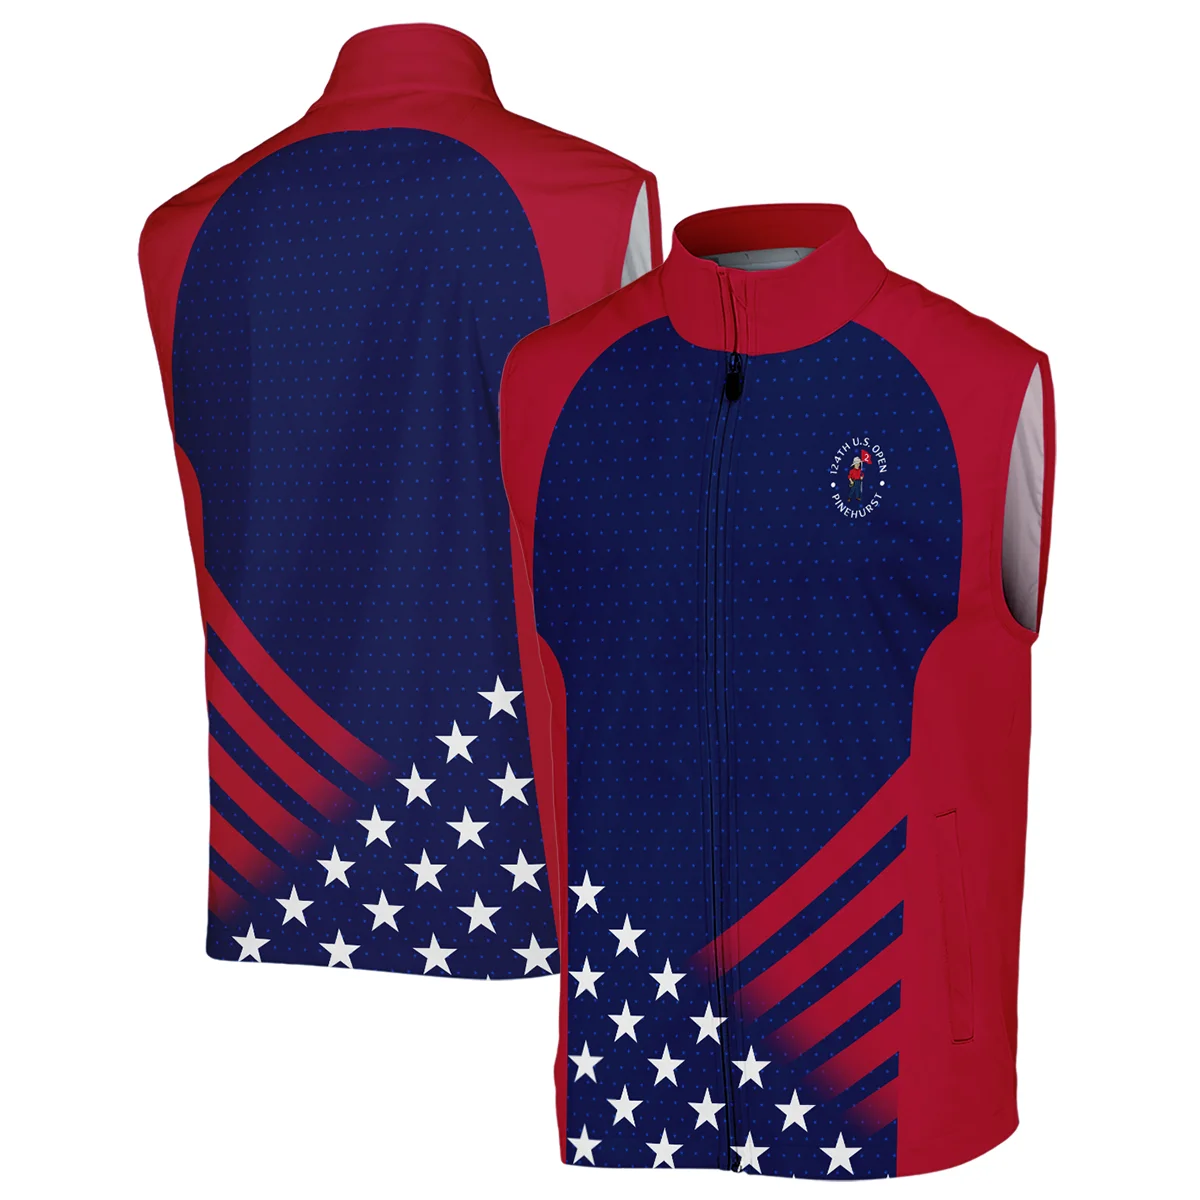 Titleist 124th U.S. Open Pinehurst Star White Dark Blue Red Background Vneck Polo Shirt Style Classic Polo Shirt For Men